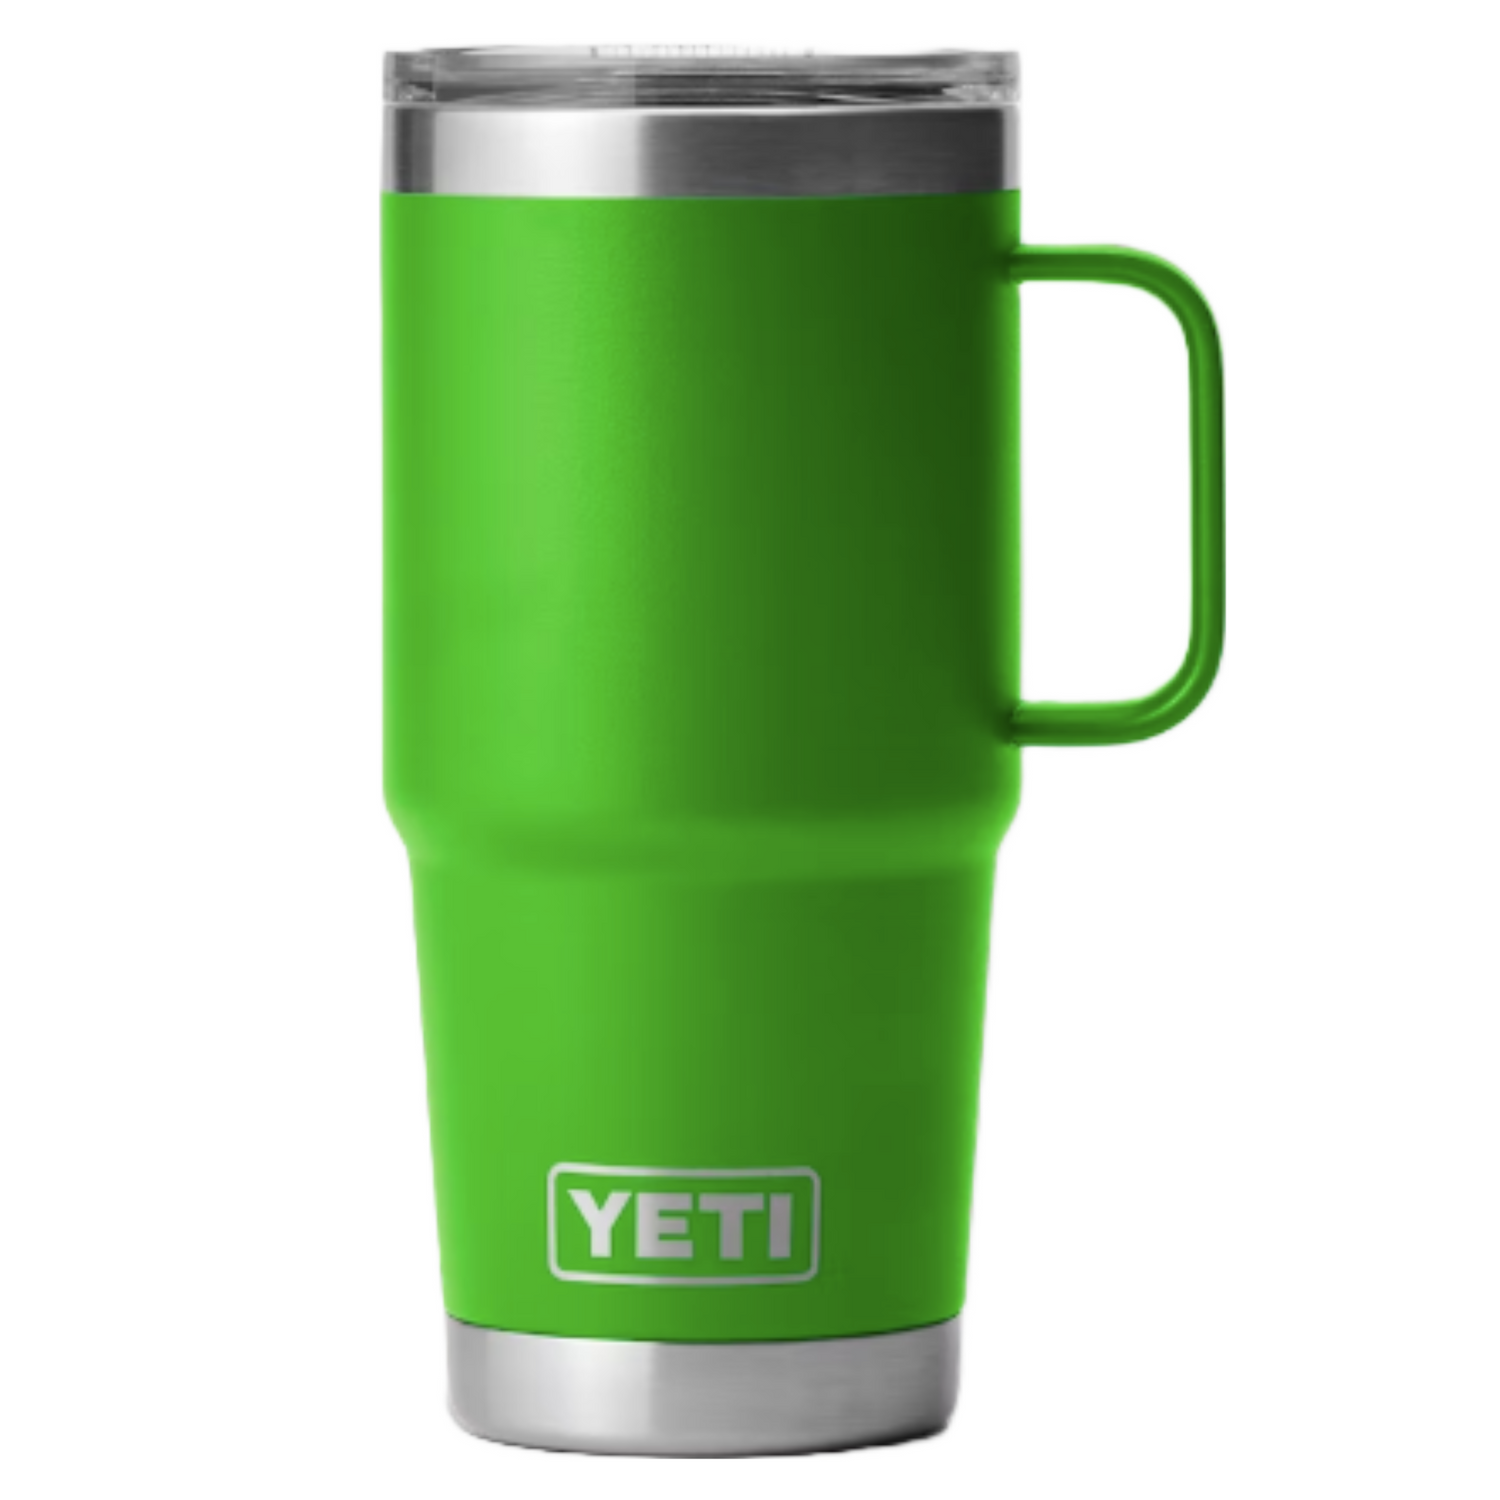 Yeti Rambler 20oz Travel Mug in Canopy Green